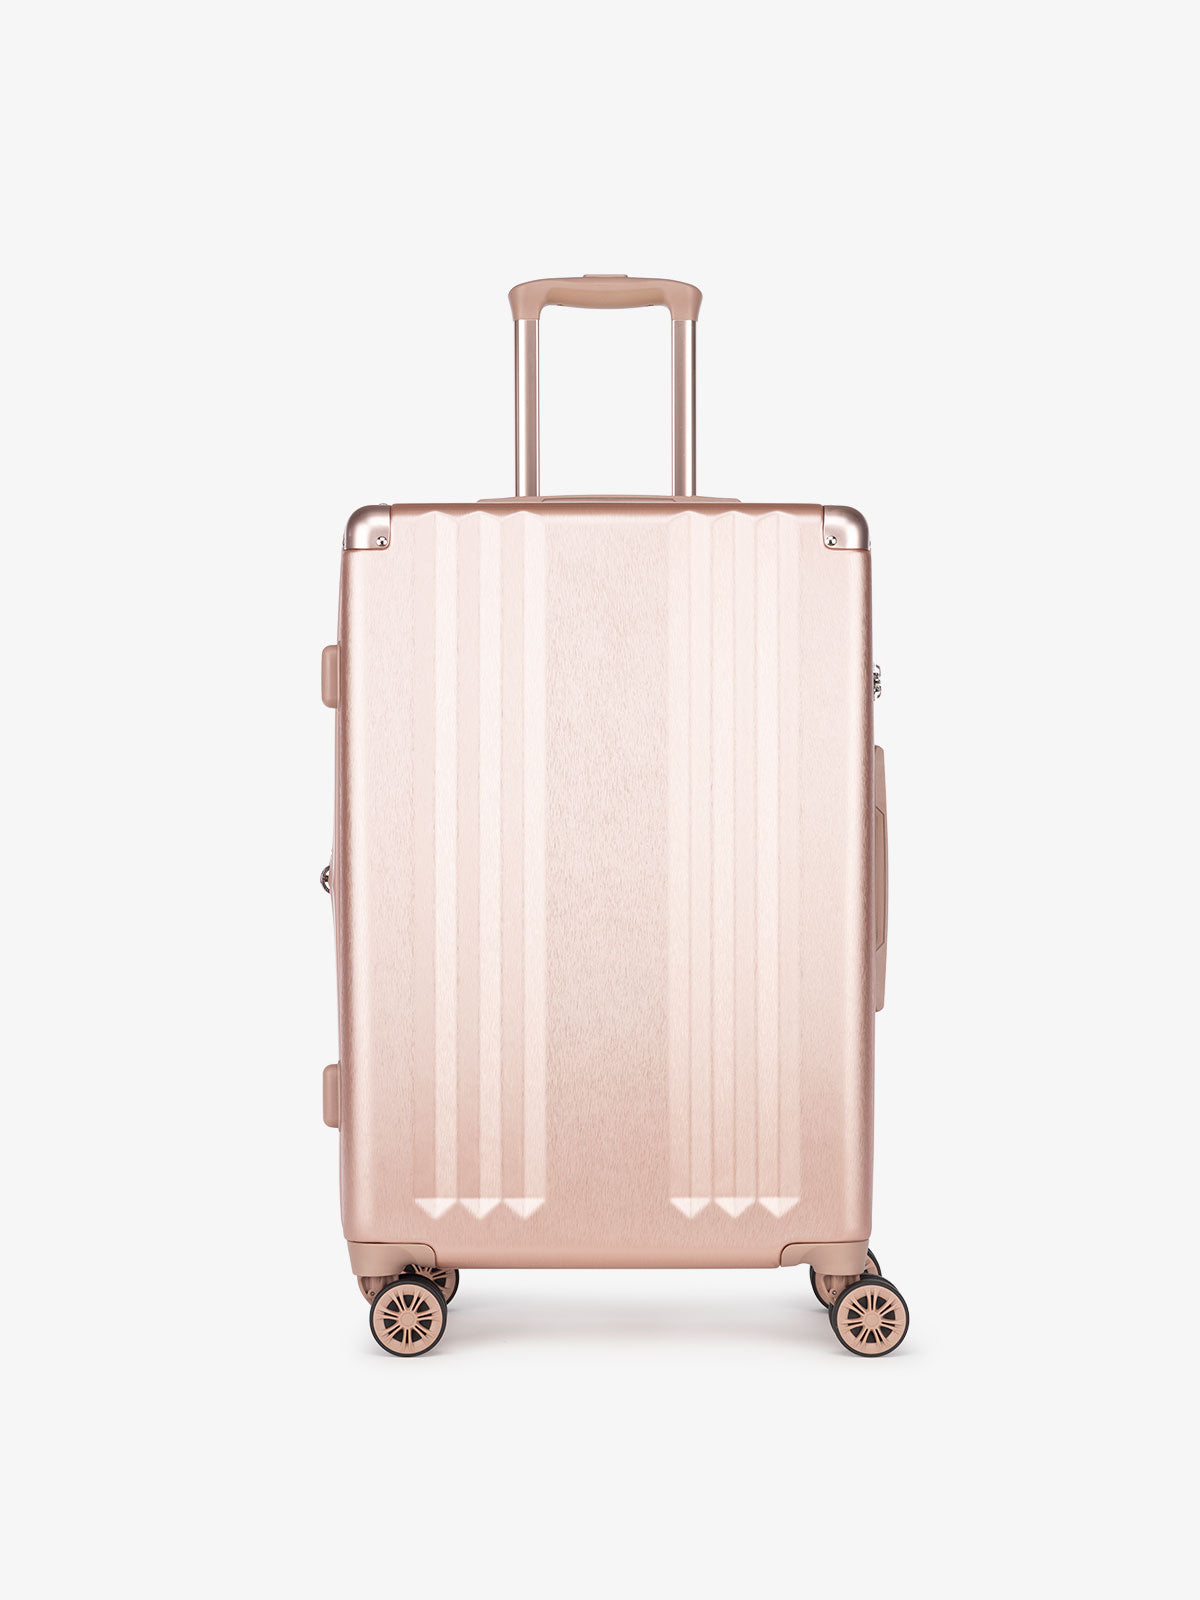 CALPAK Ambeur pink rose gold medium 26 inch lightweight hard shell rolling luggage